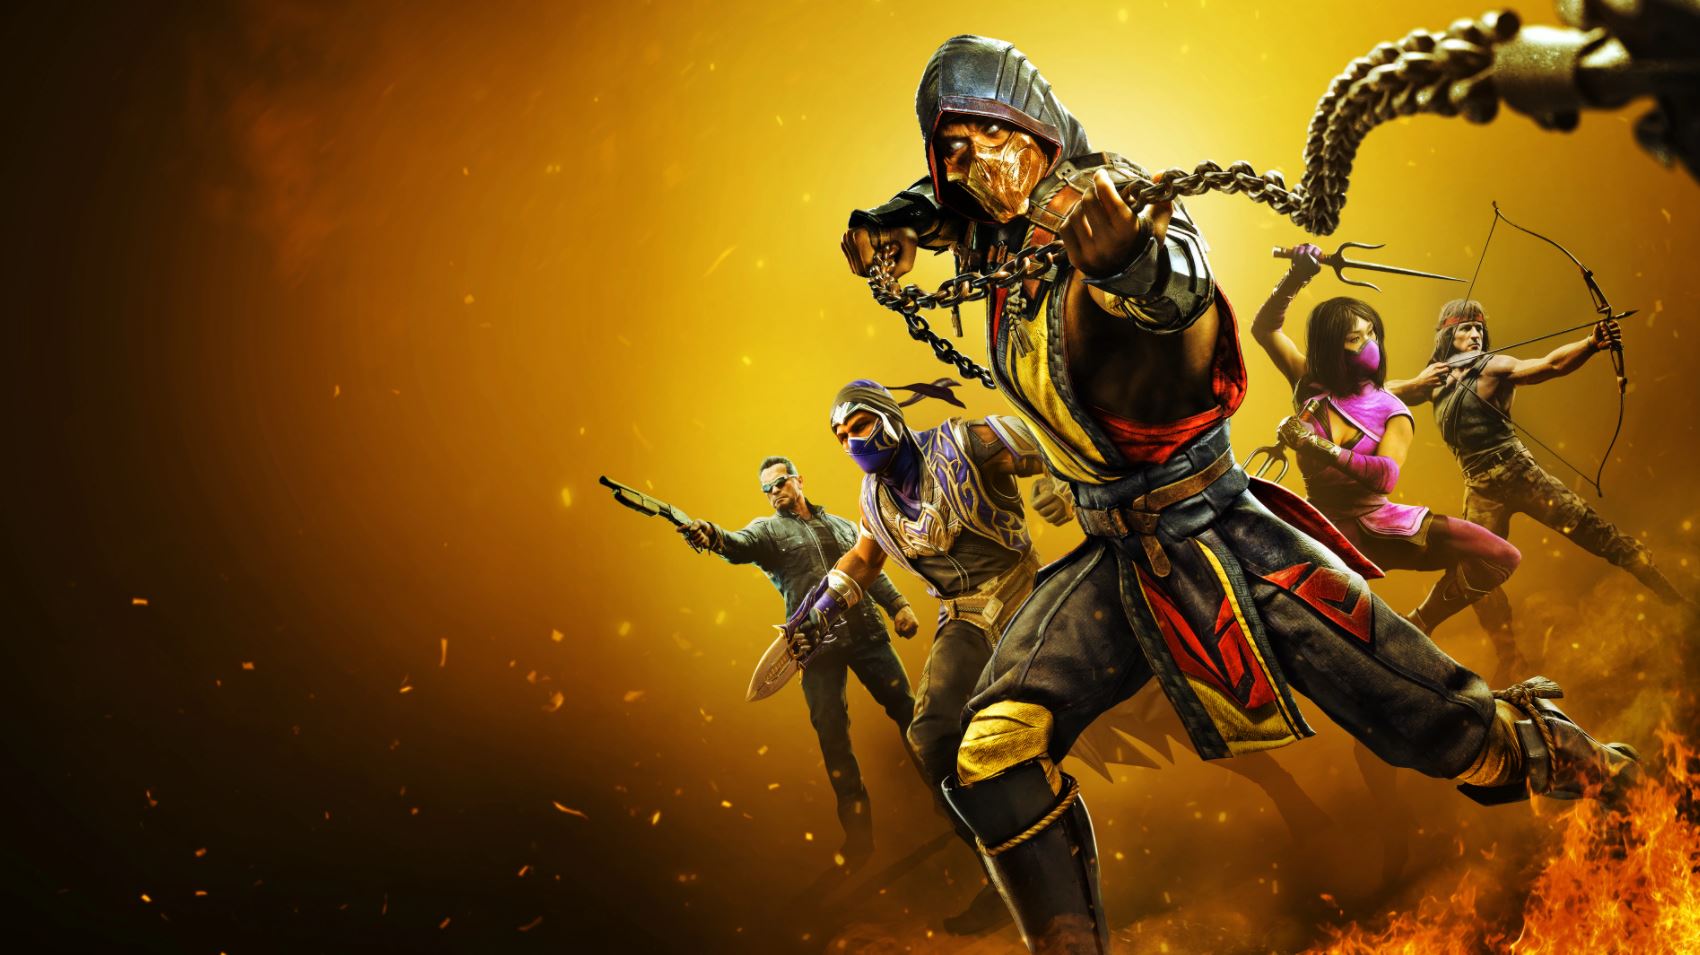 Mortal Kombat games play online » Mortal Kombat games, fan site!